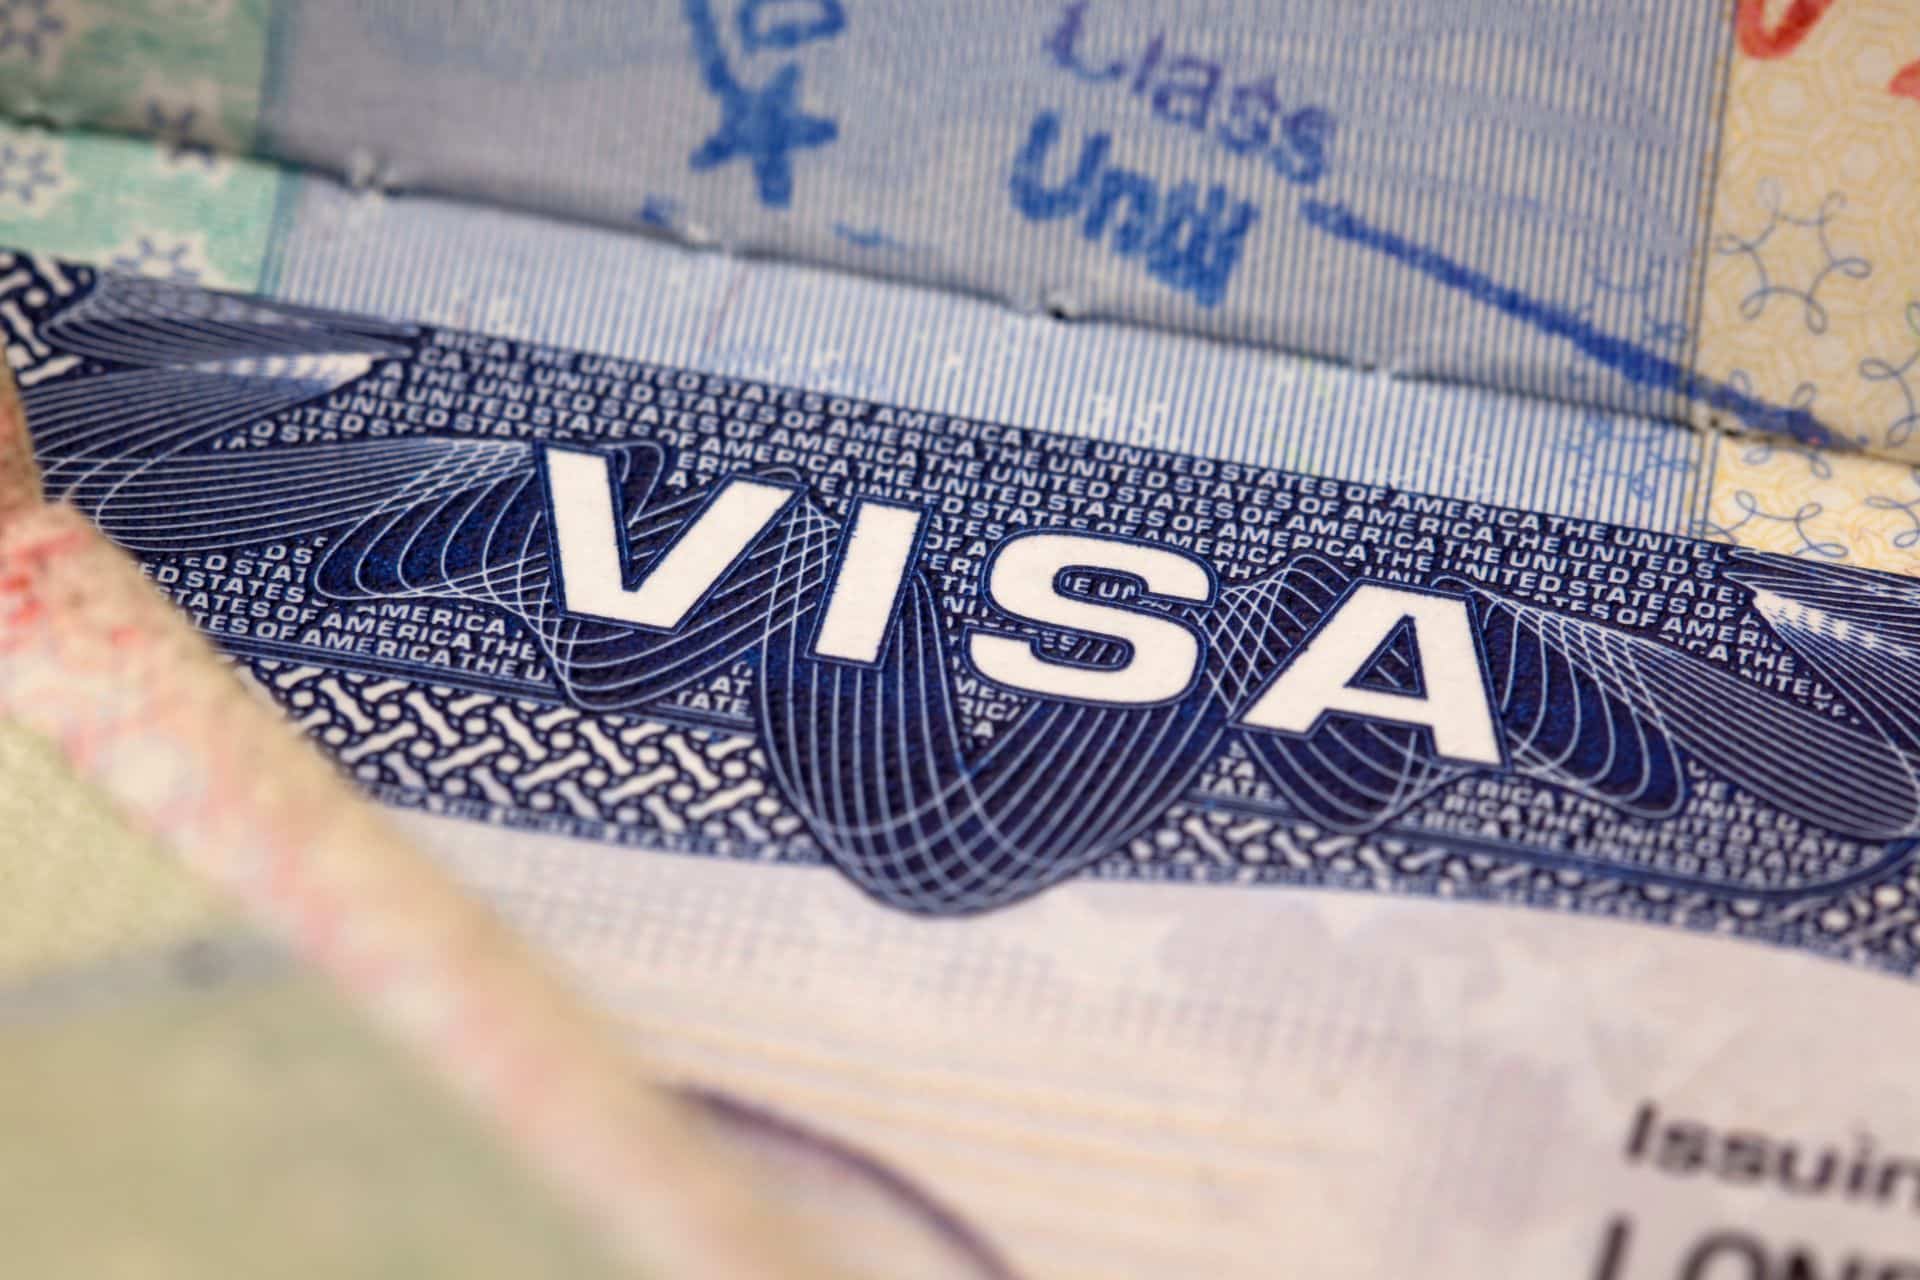 June 2023 Visa Bulletin EmploymentBased and Family Based Categories